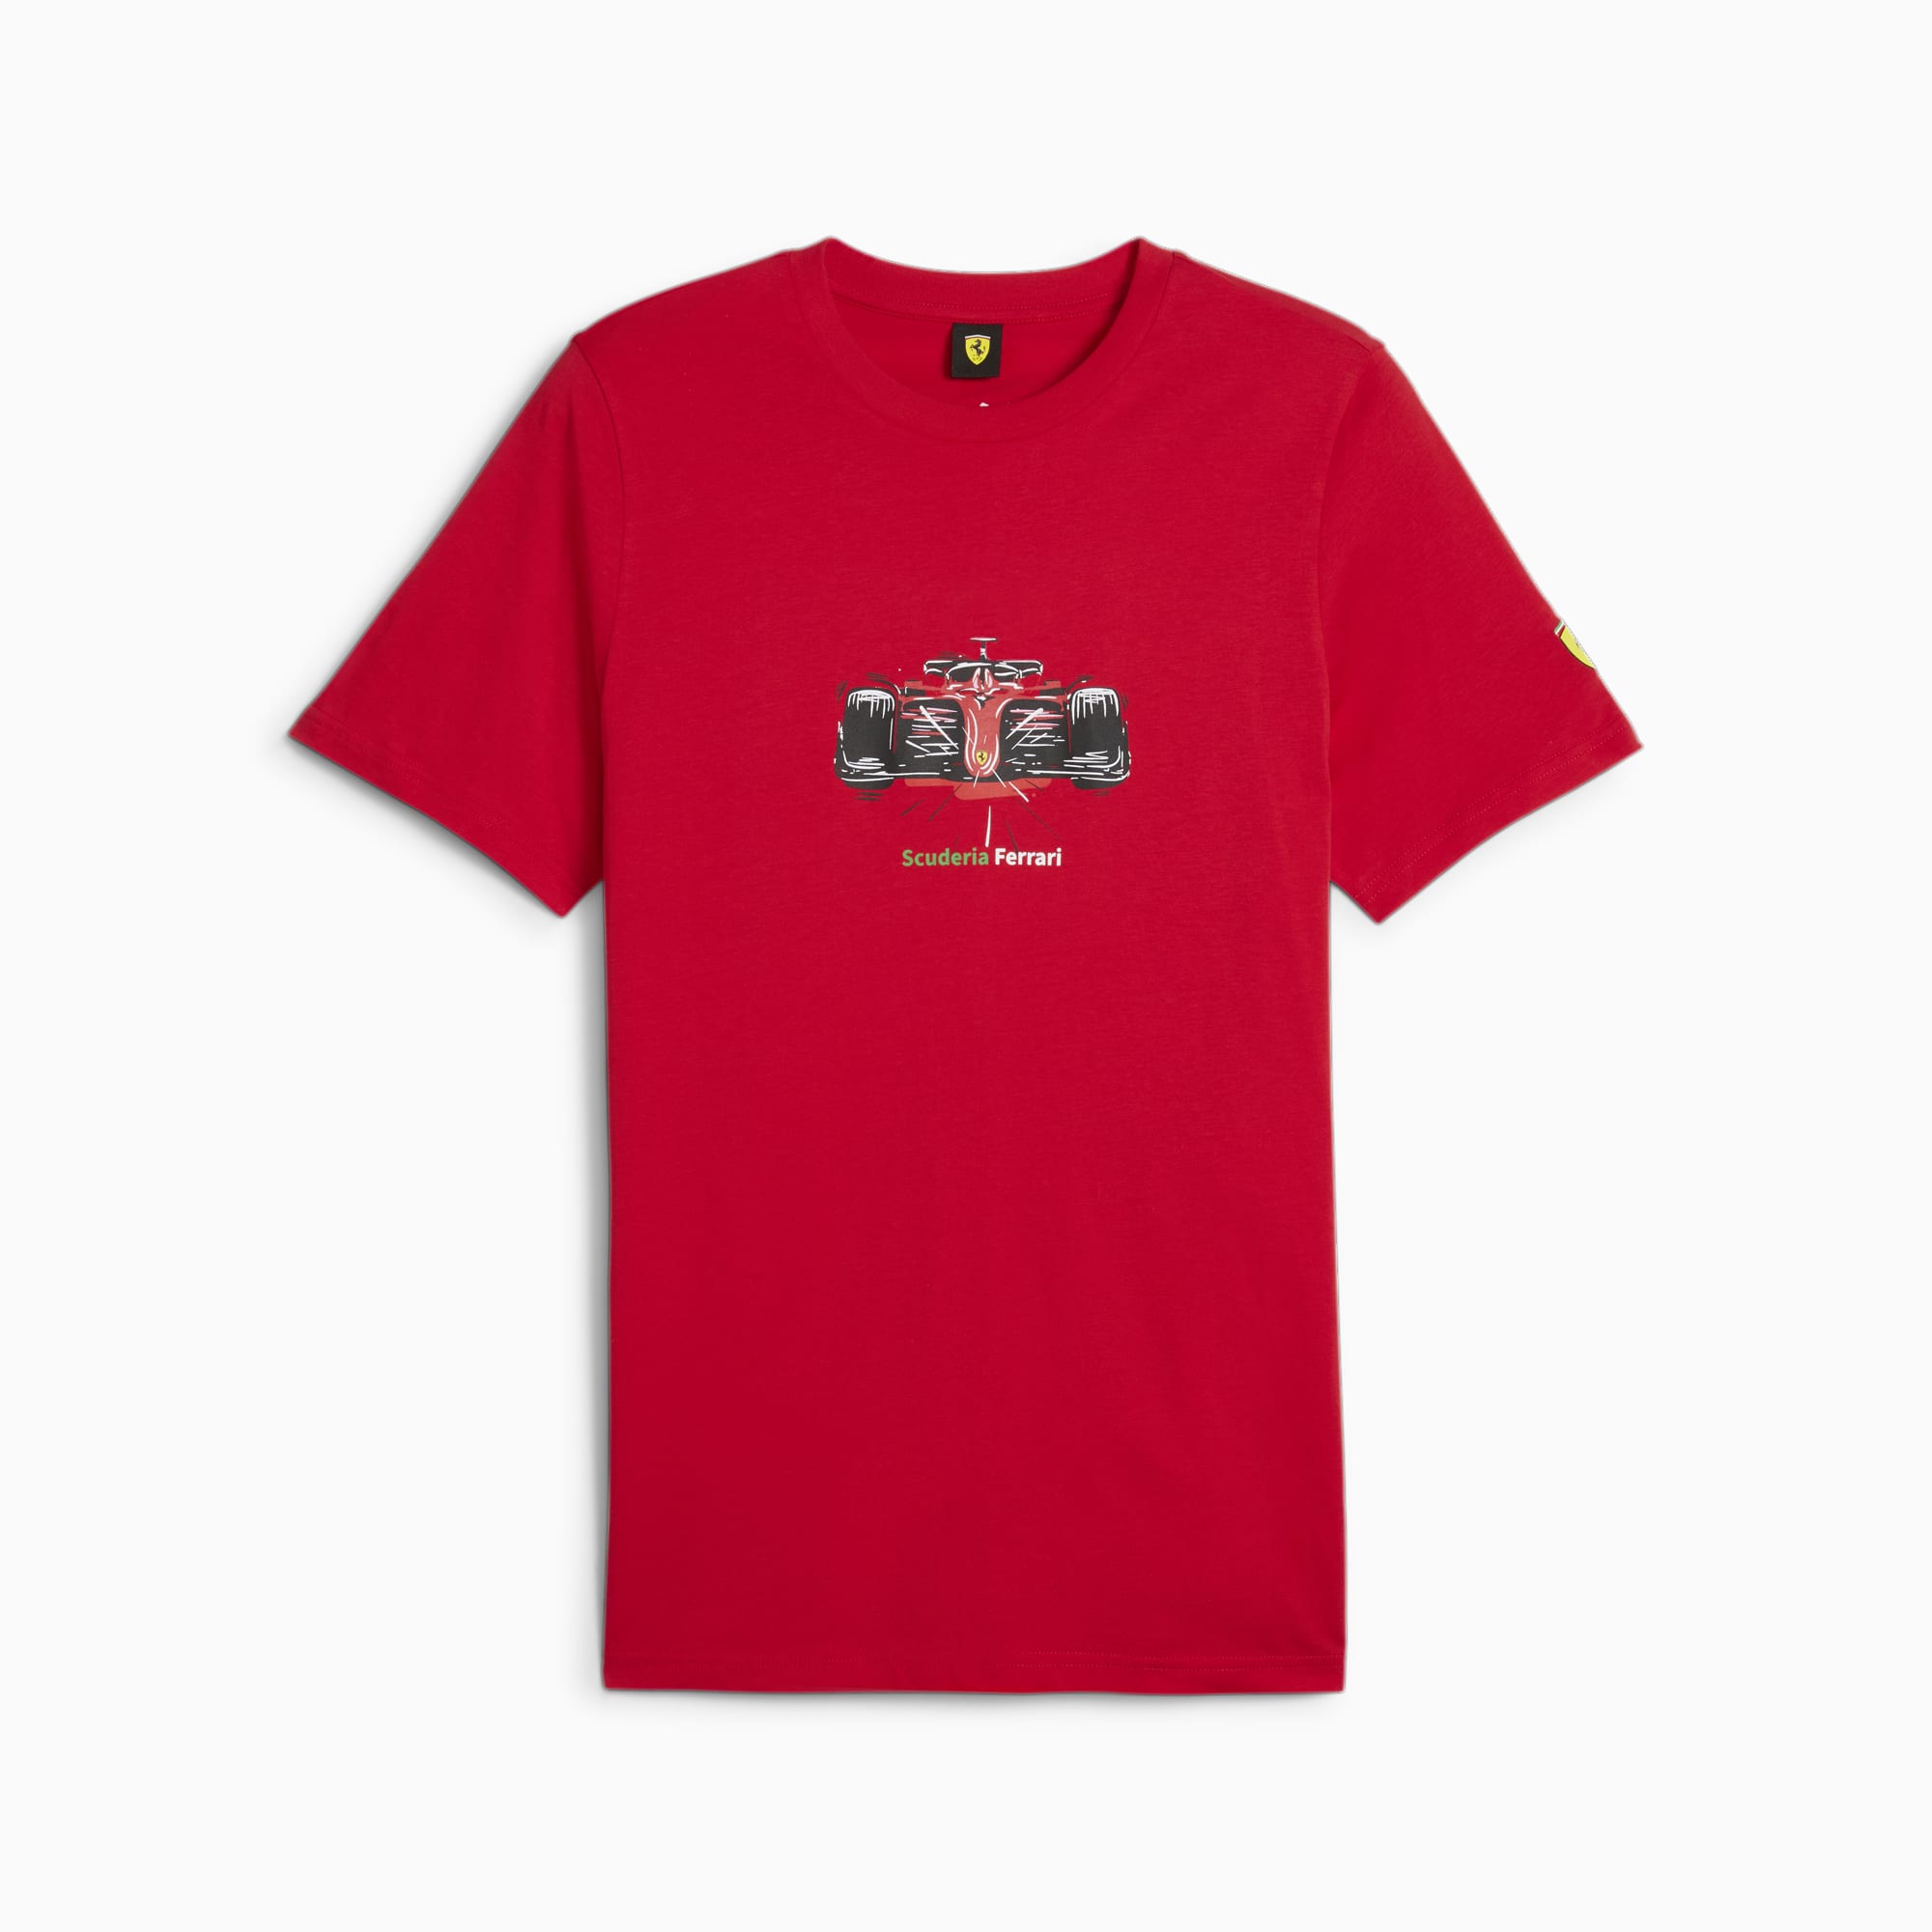 PUMA Scuderia Ferrari Men's Motorsport Race Graphic T-Shirt, Red, Size XS, Clothing